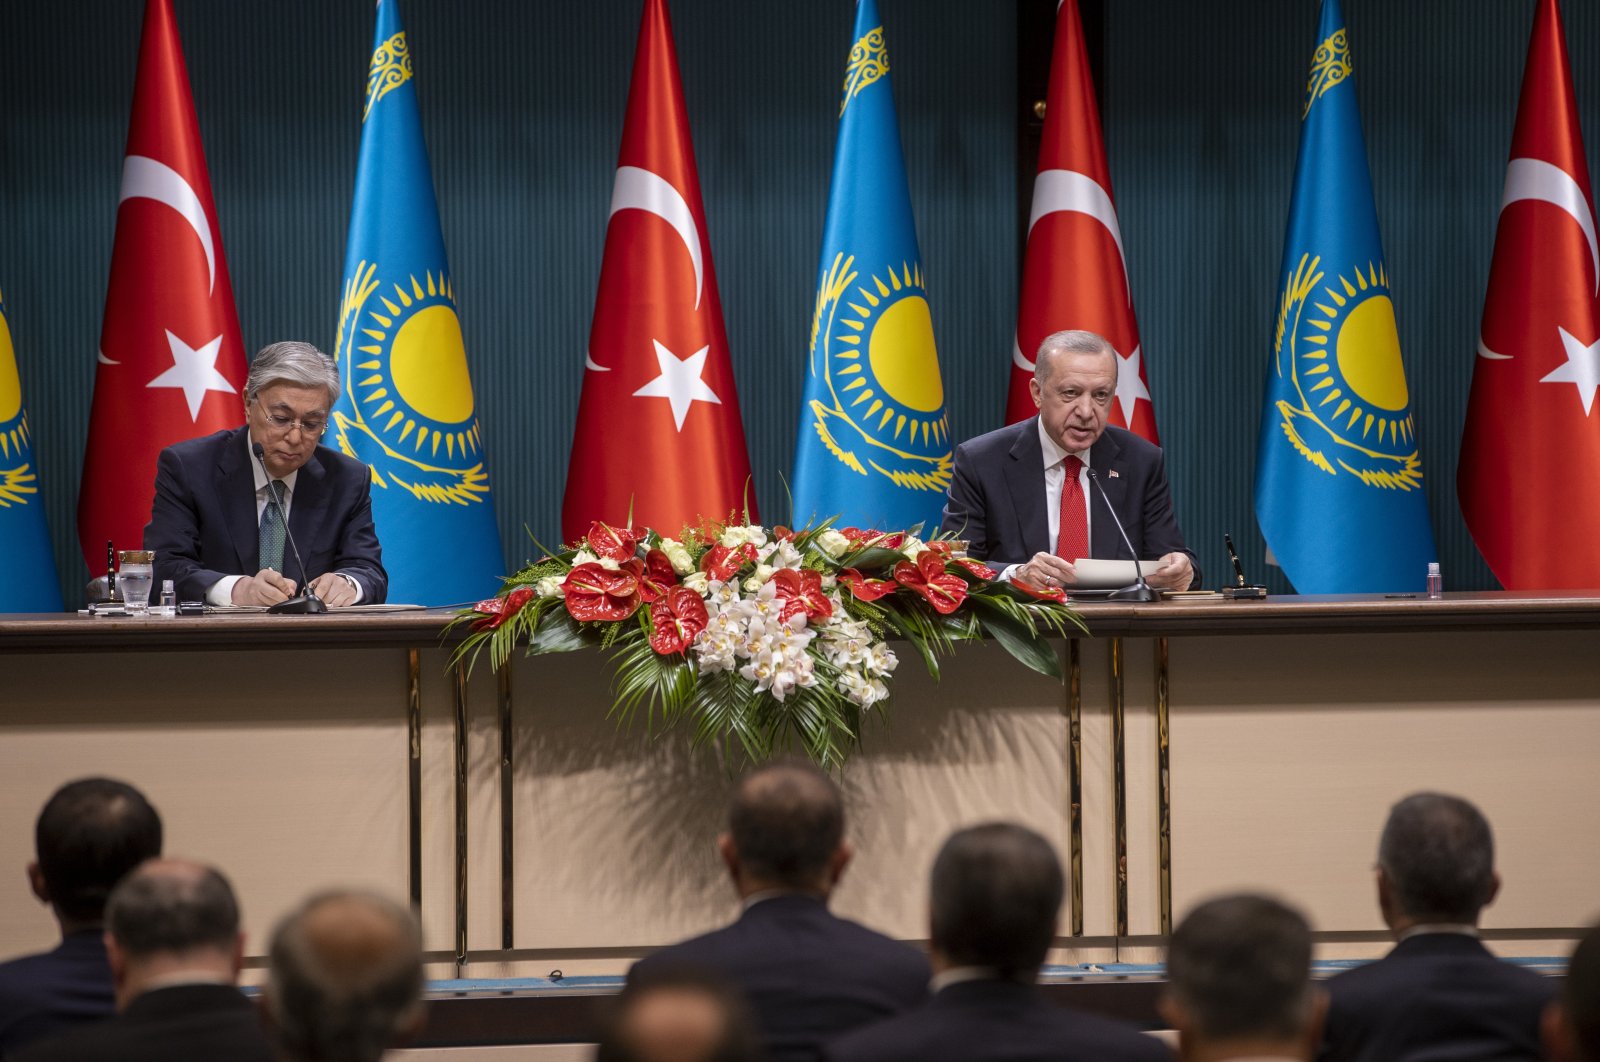 President Recep Tayyip Erdoğan and his Kazakh counterpart Kassym-Jomart Tokayev hold a joint press conference in the capital Ankara, Turkey, May 10, 2022. (AA Photo)